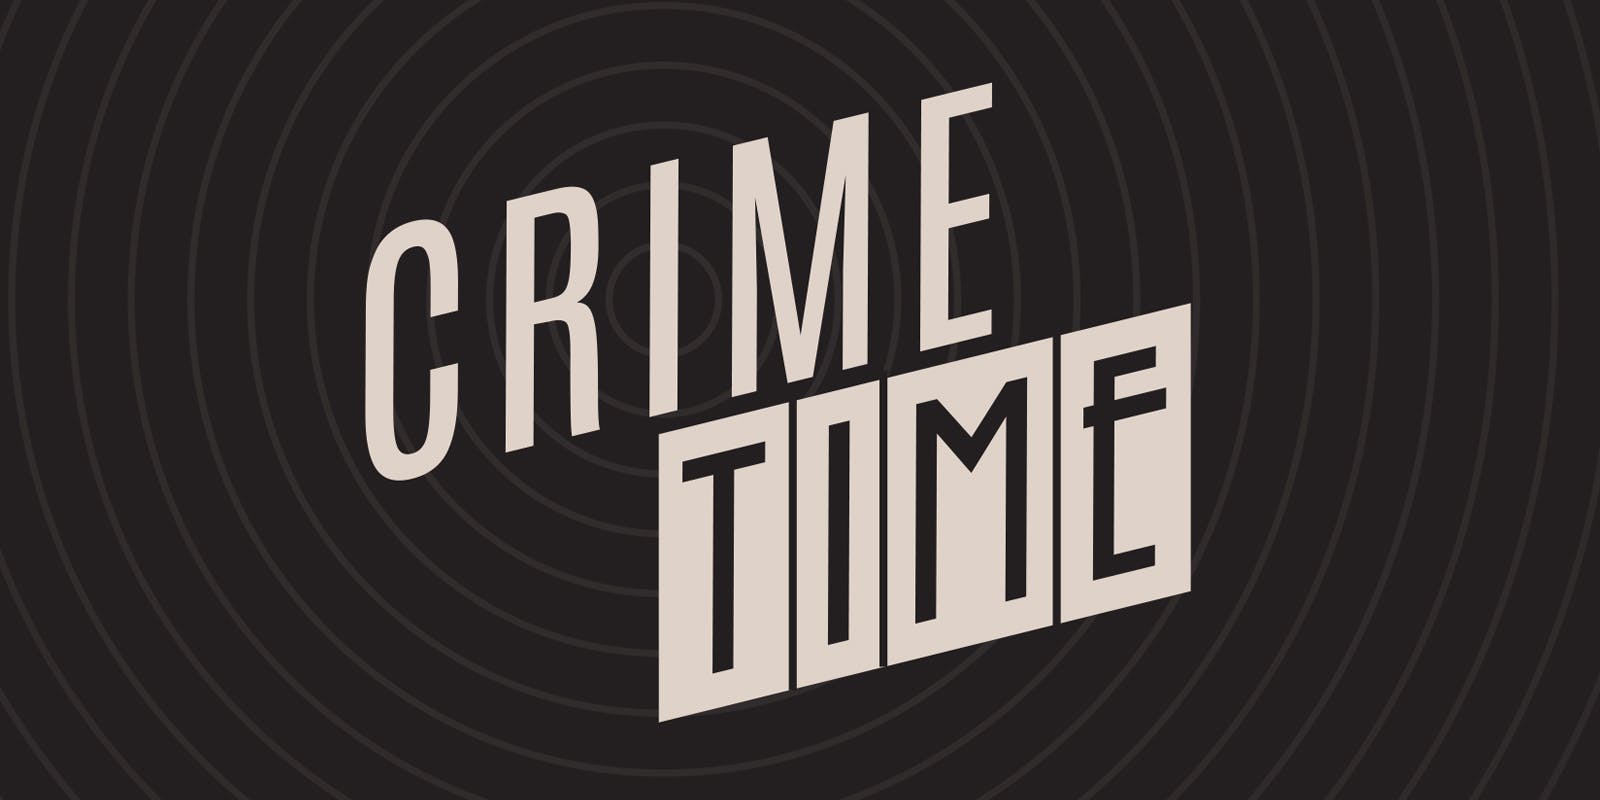 Find your next crime/thriller read